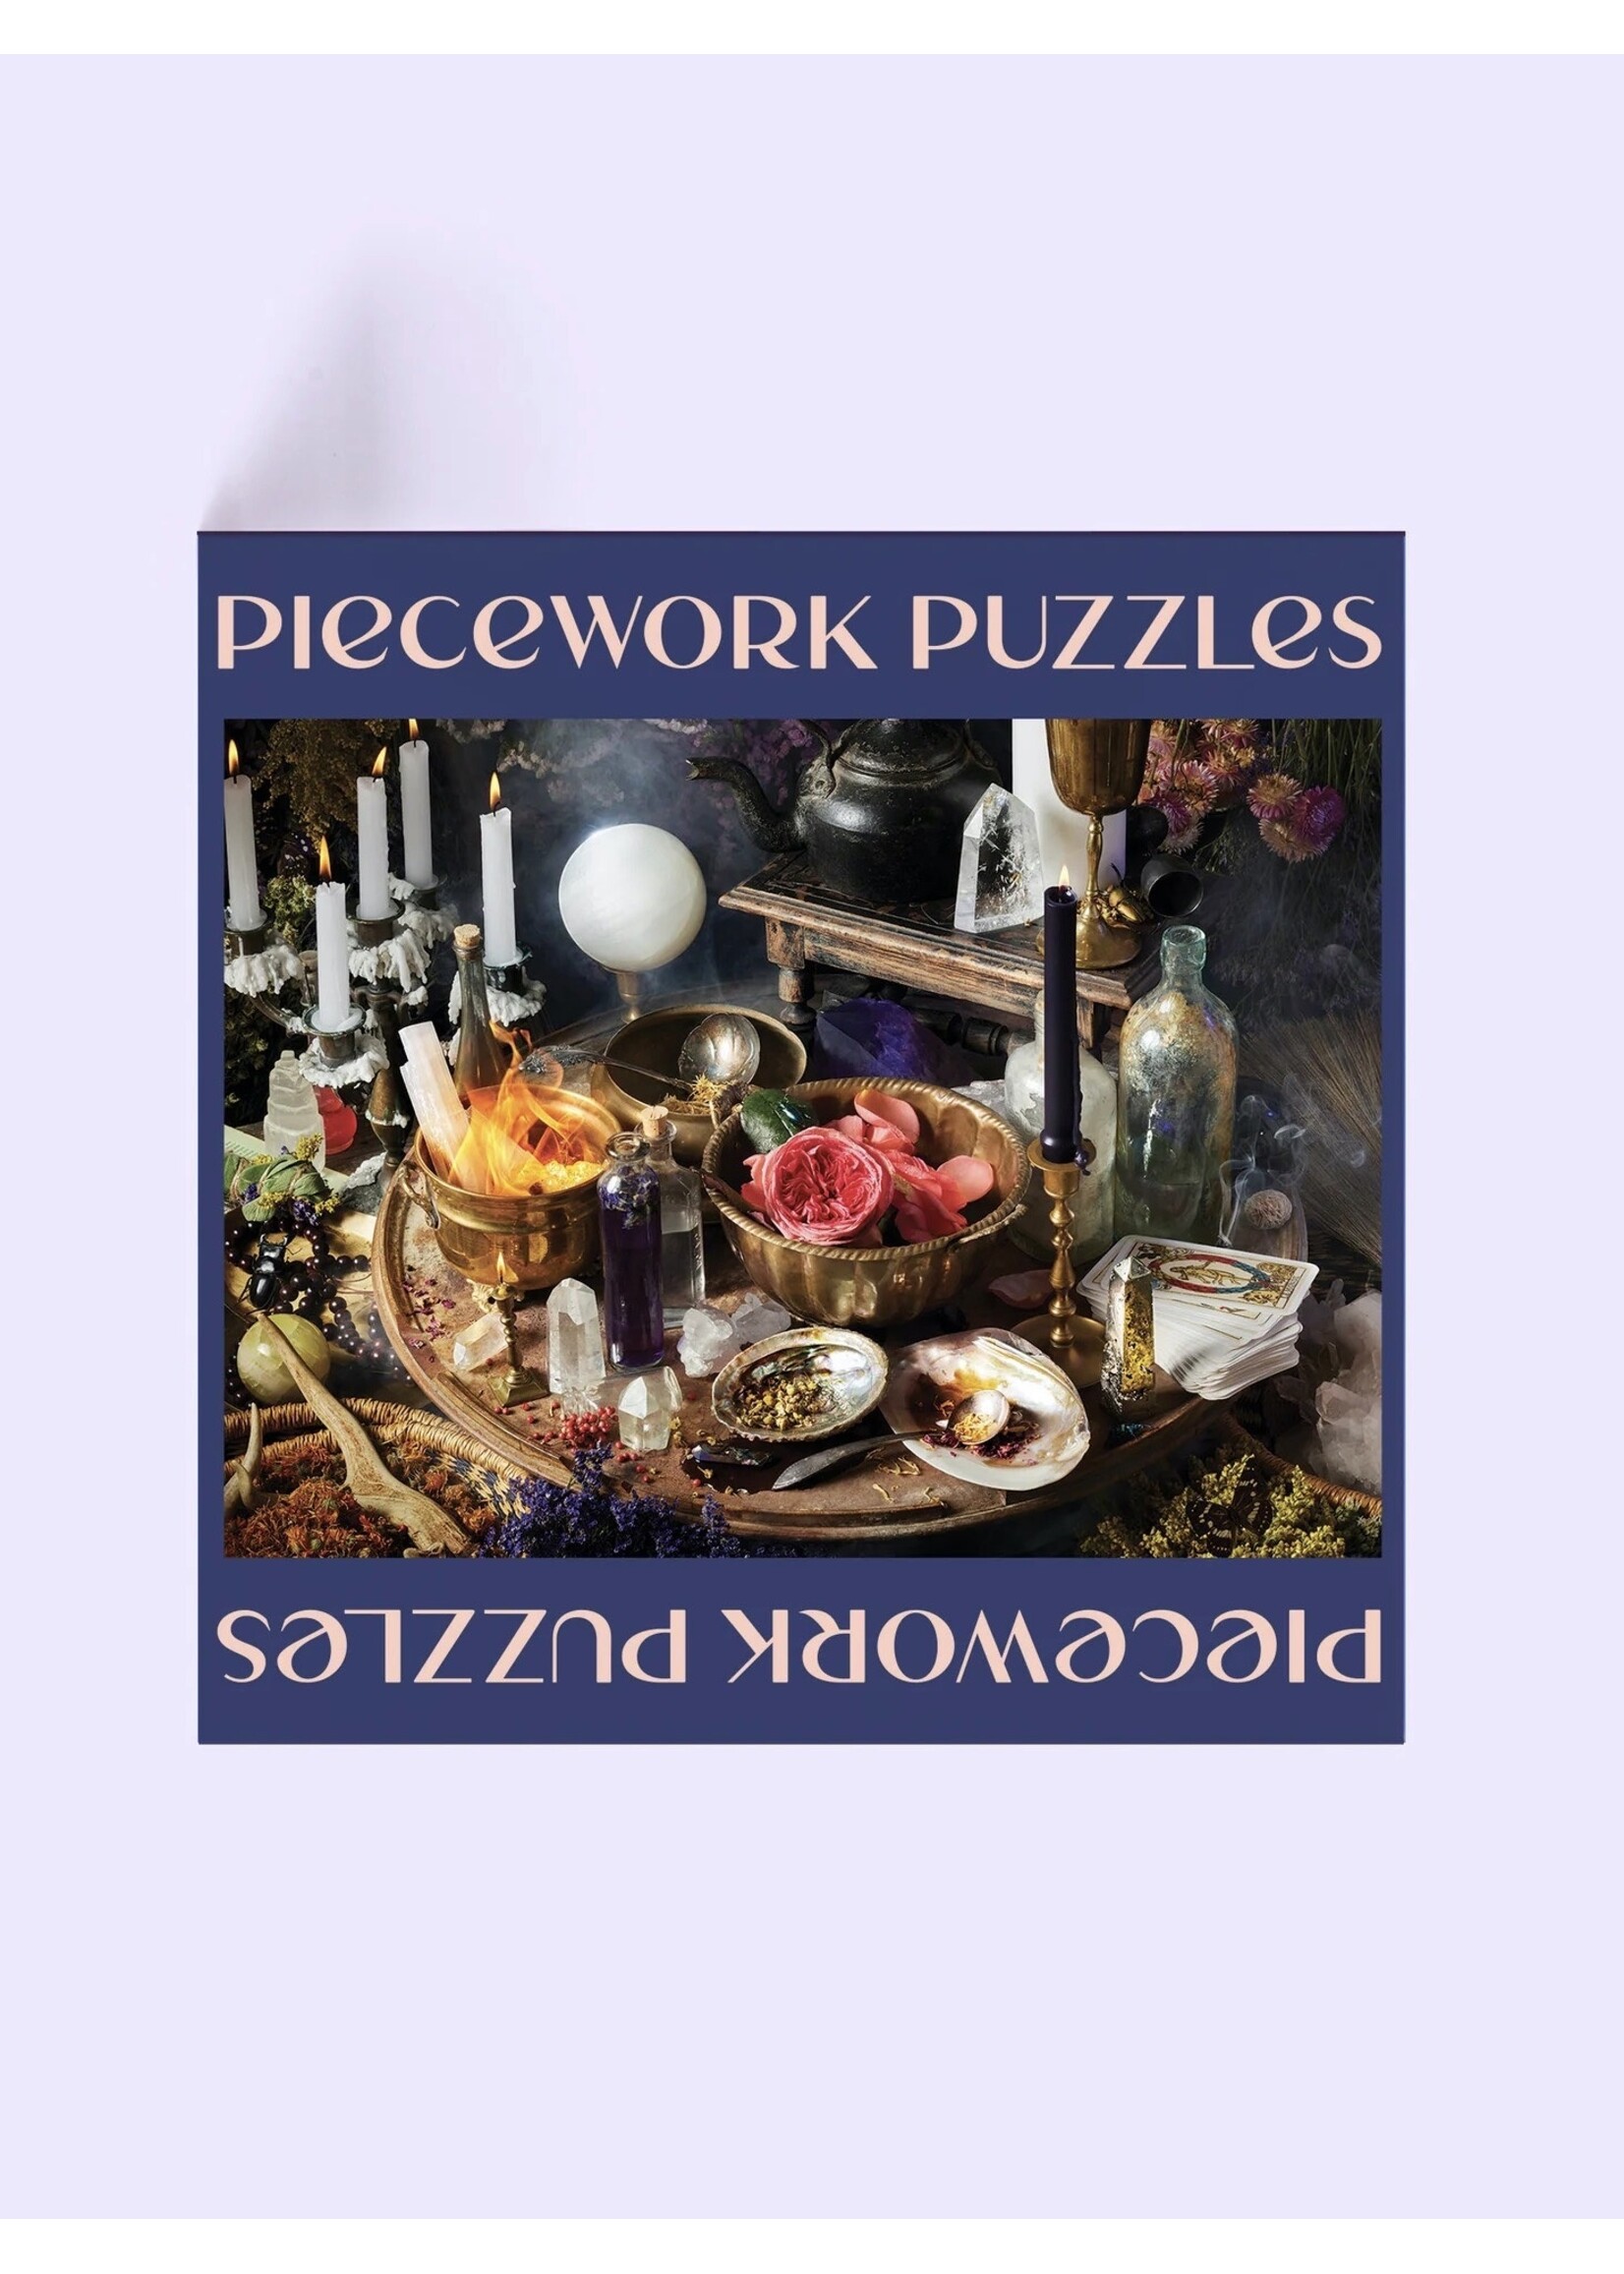 Piecework Puzzles 500-piece puzzles by PIECEWORK